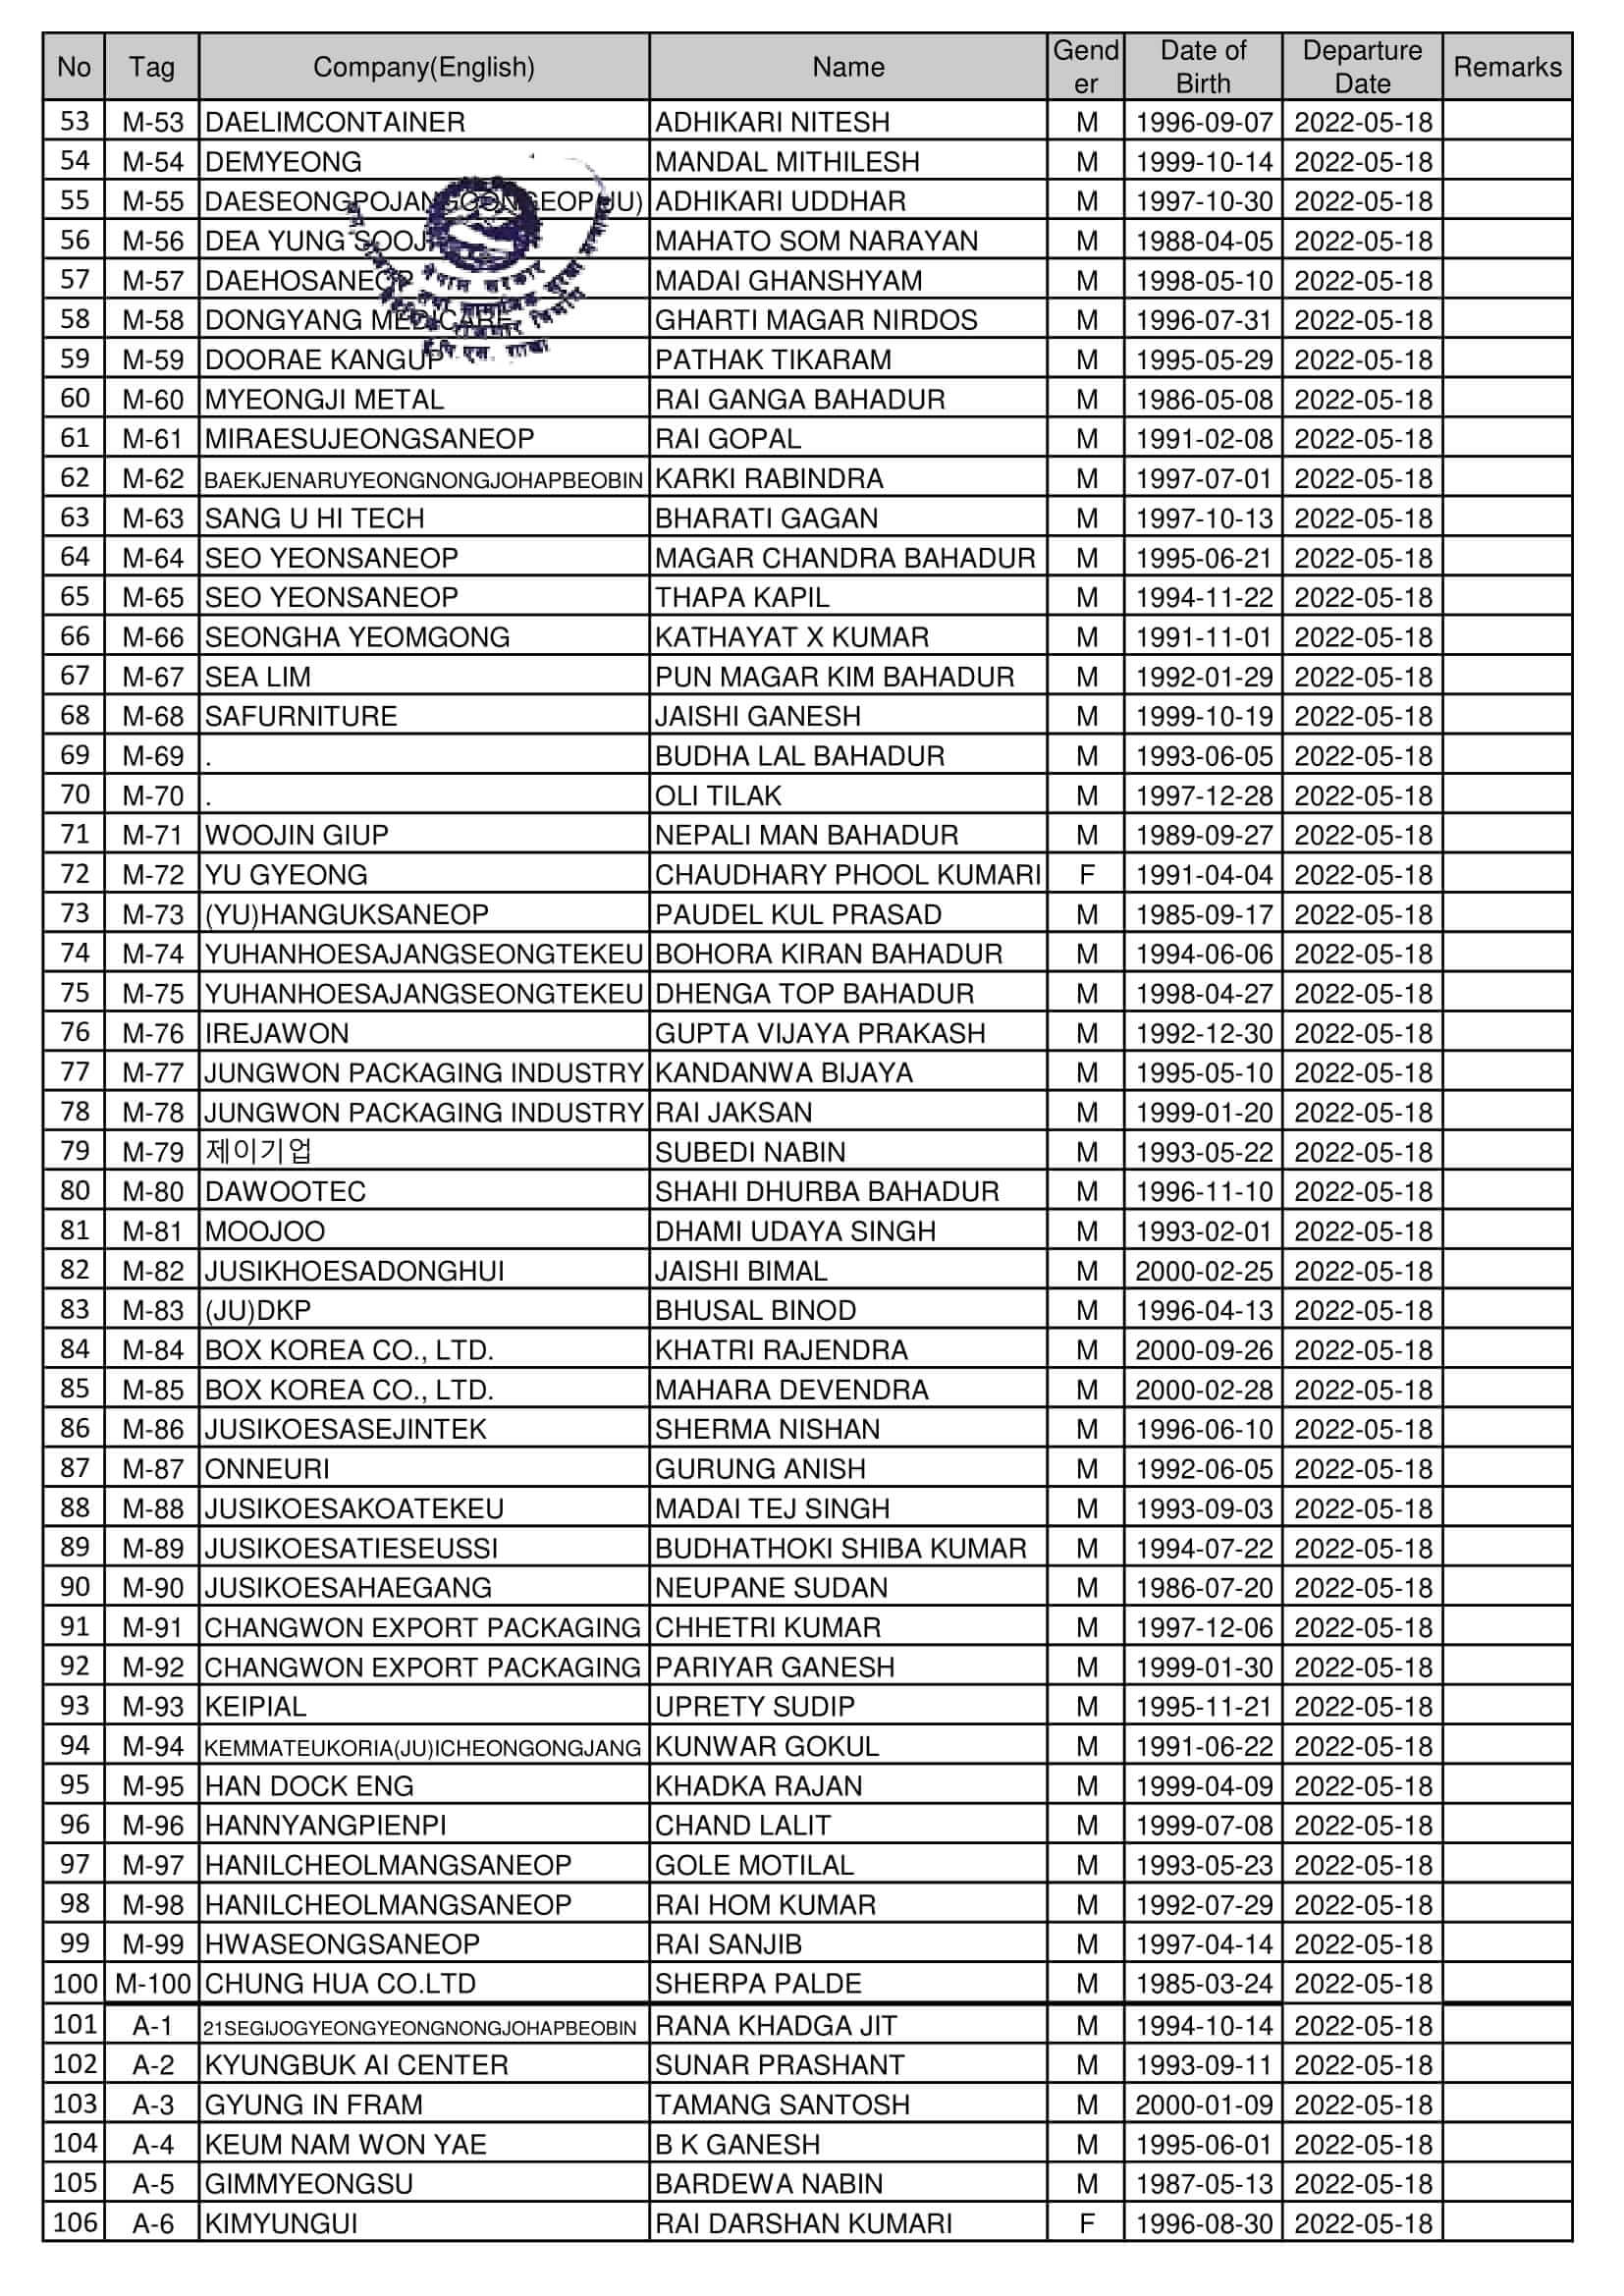 Final Name Lists of RW on 18 May 2022